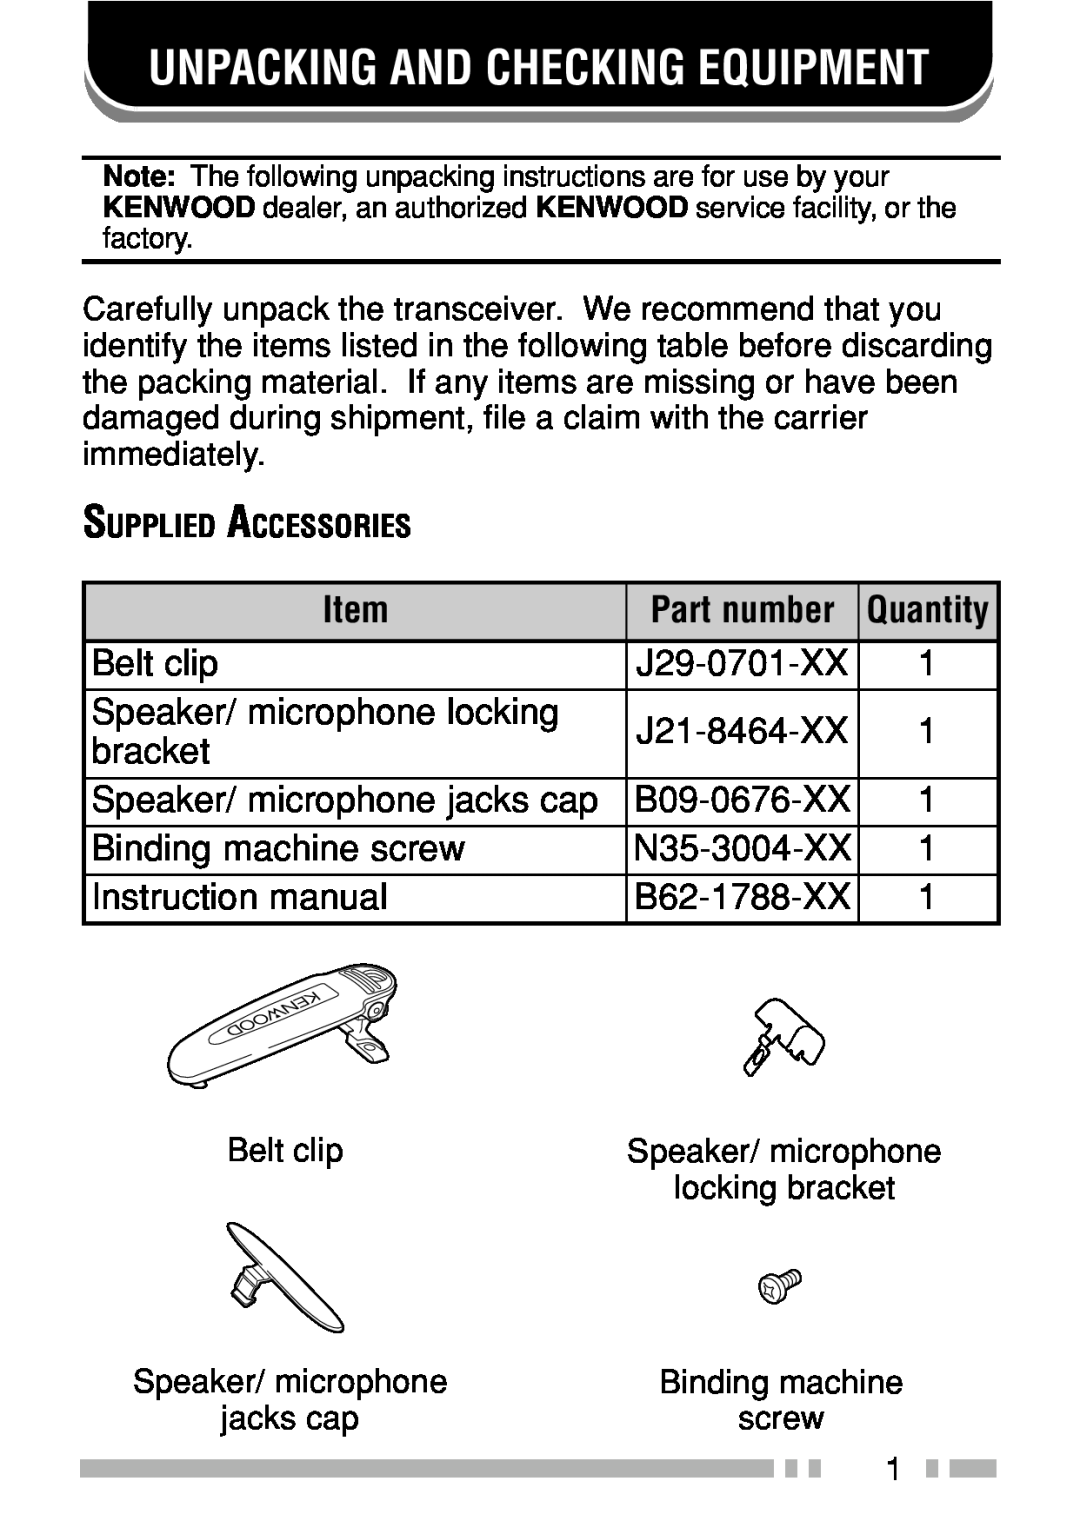 Kenwood TK-3160 instruction manual Unpacking And Checking Equipment, Item 